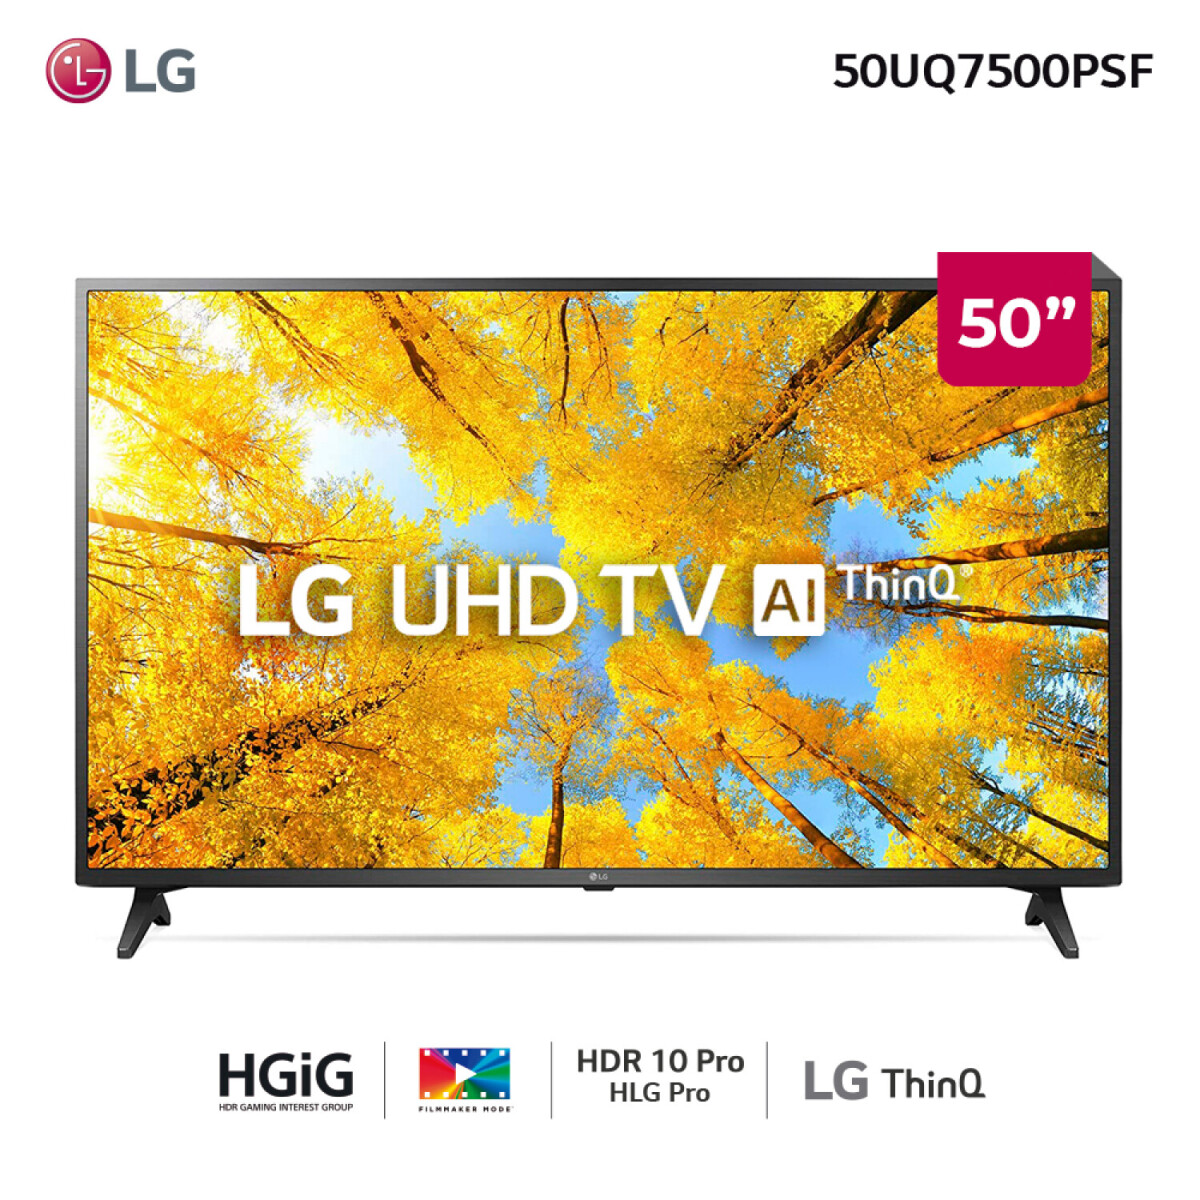 TV LED 50" 4K Smart LG 50UP7500PSF 